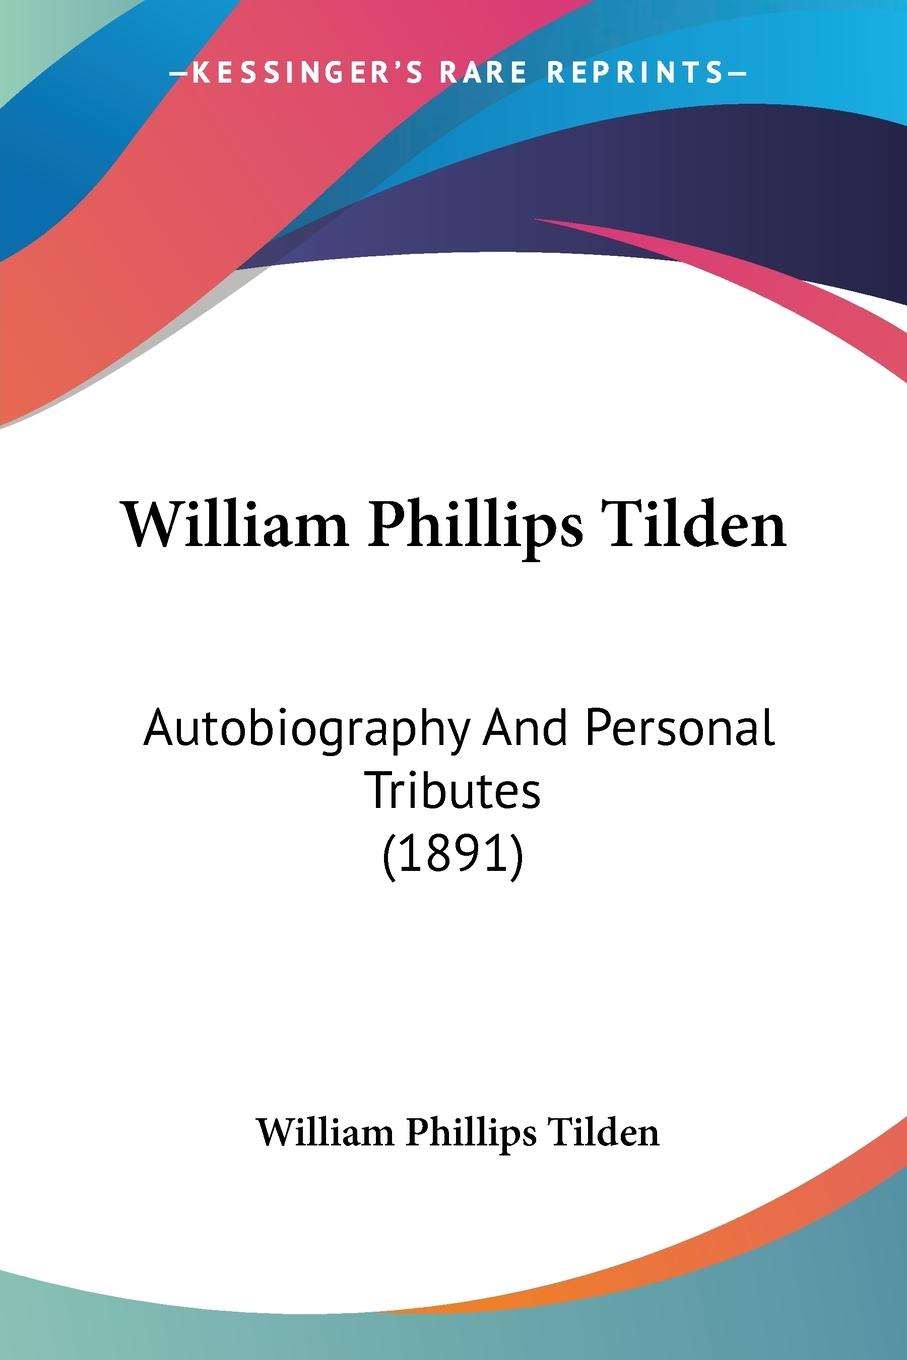 William Phillips Tilden - Tilden, William Phillips